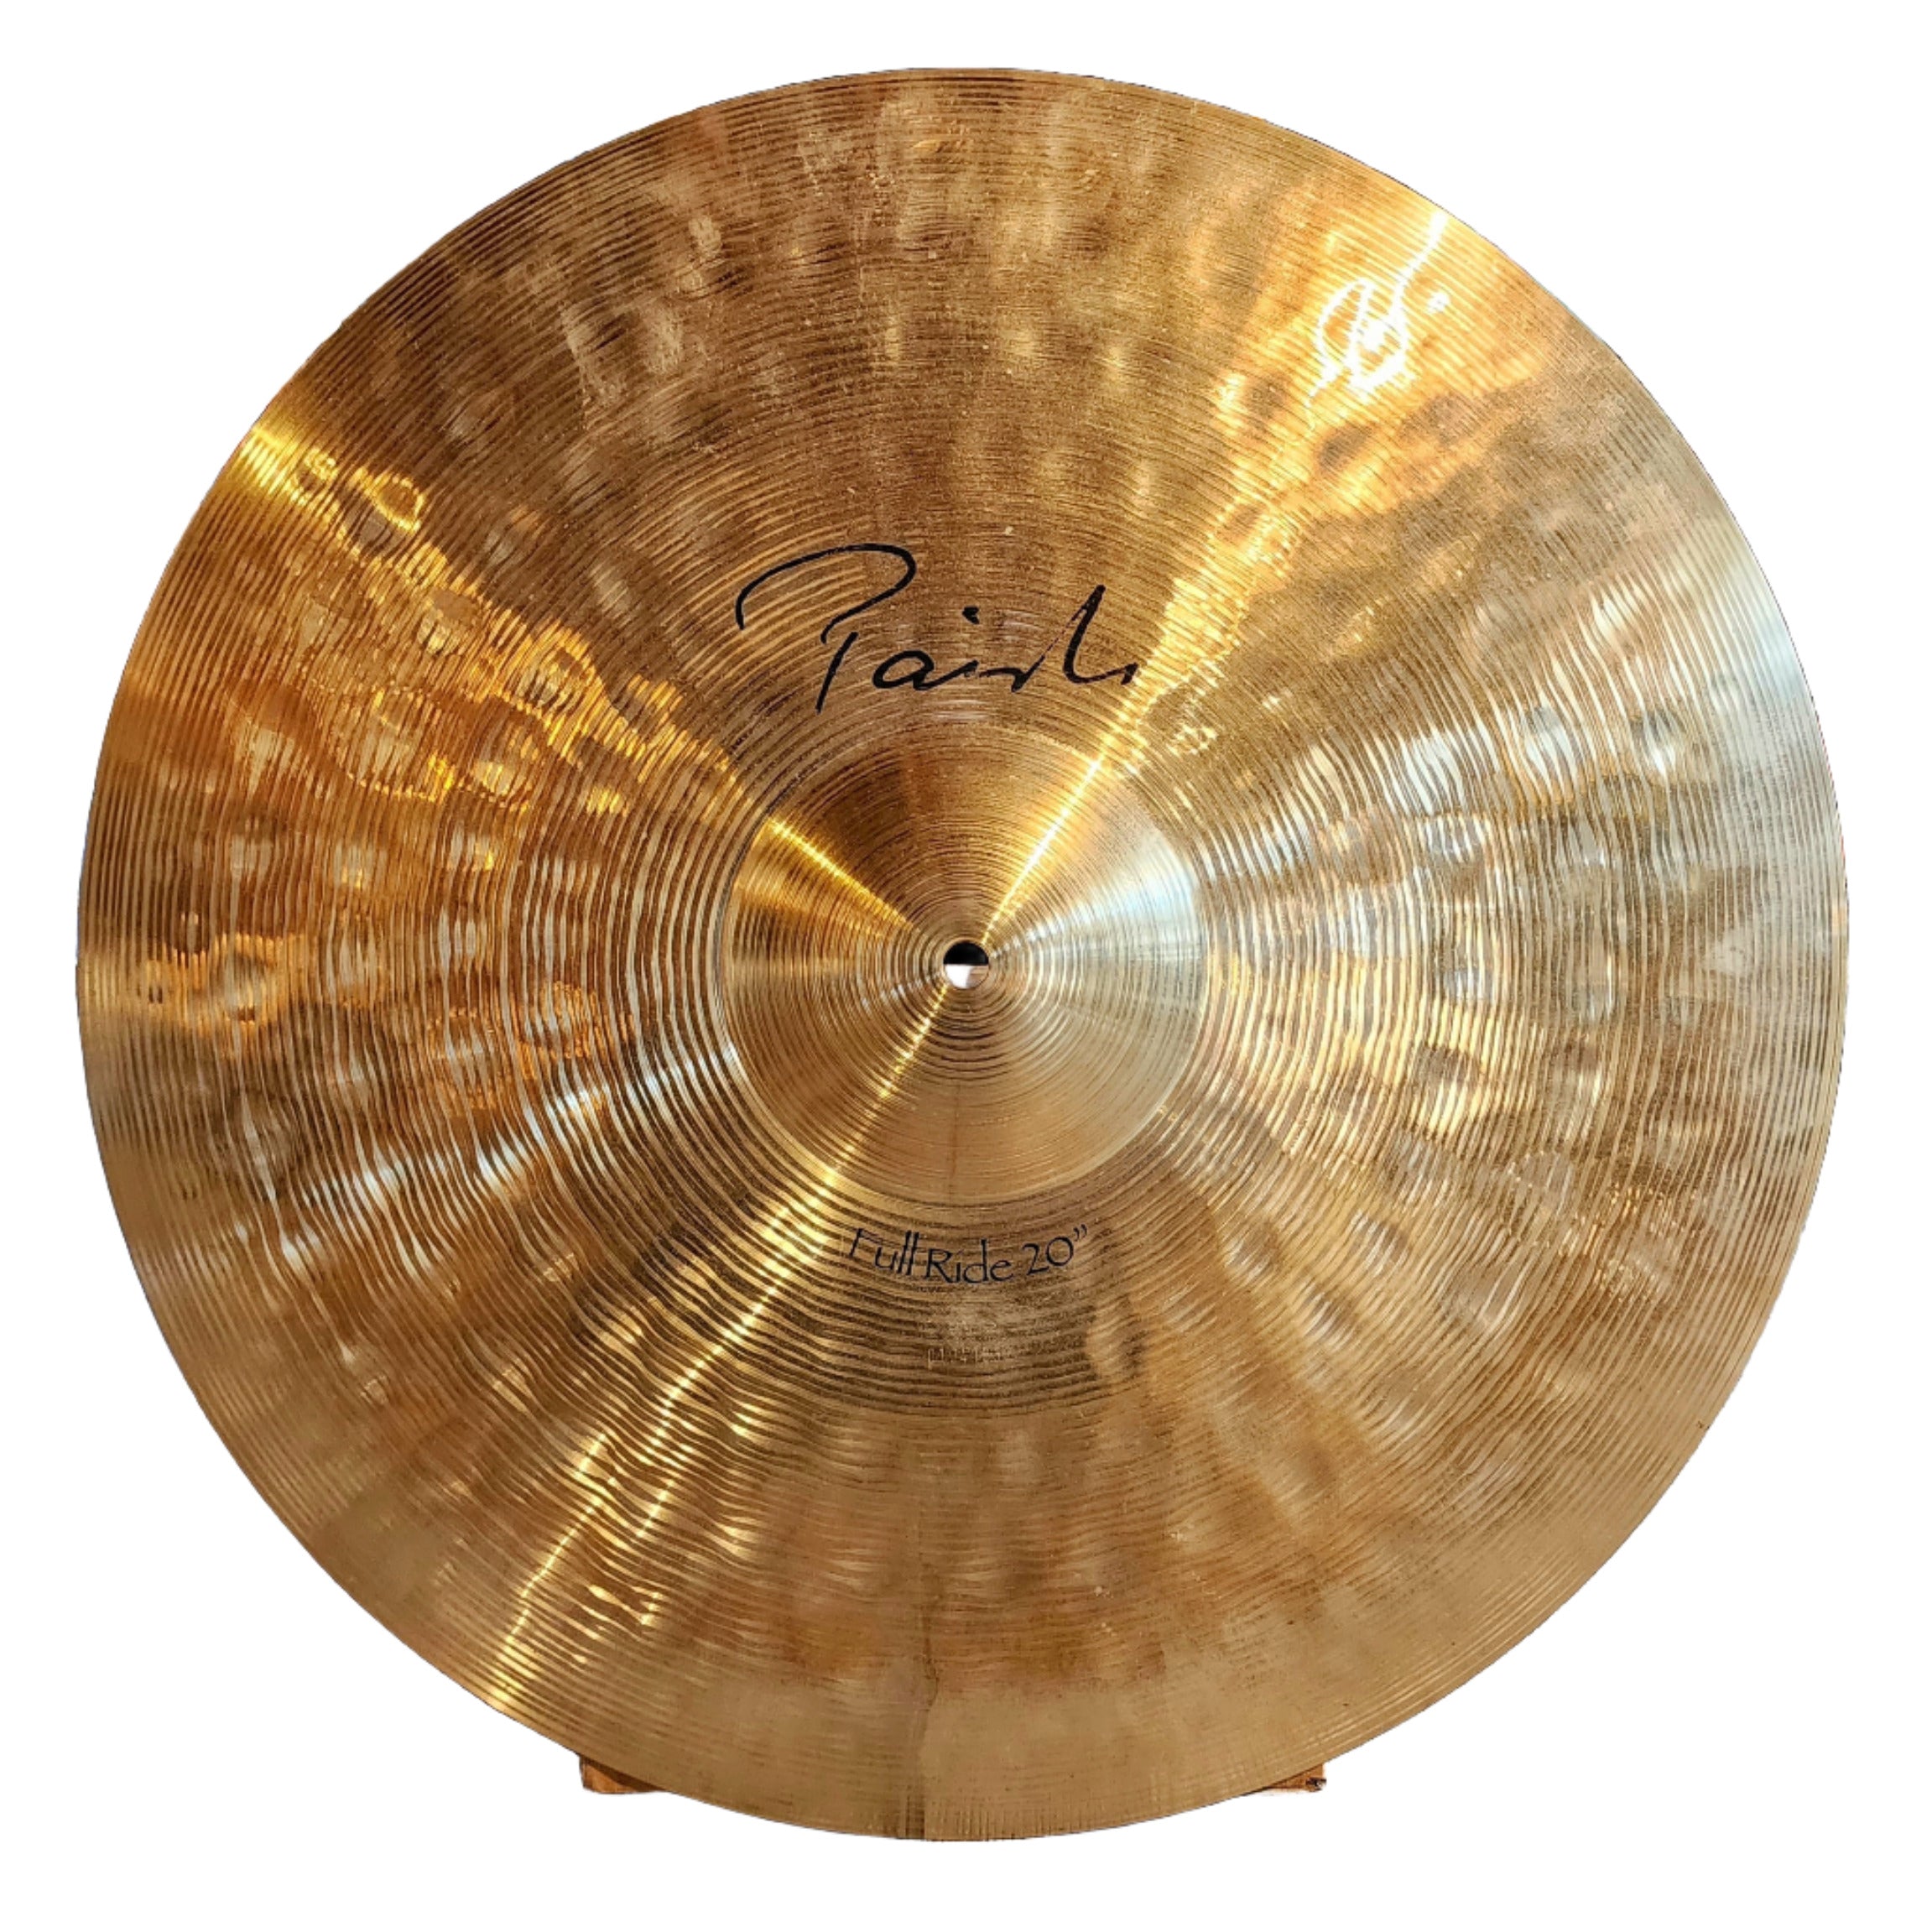 Used Paiste Signature Full Ride Cymbal 20